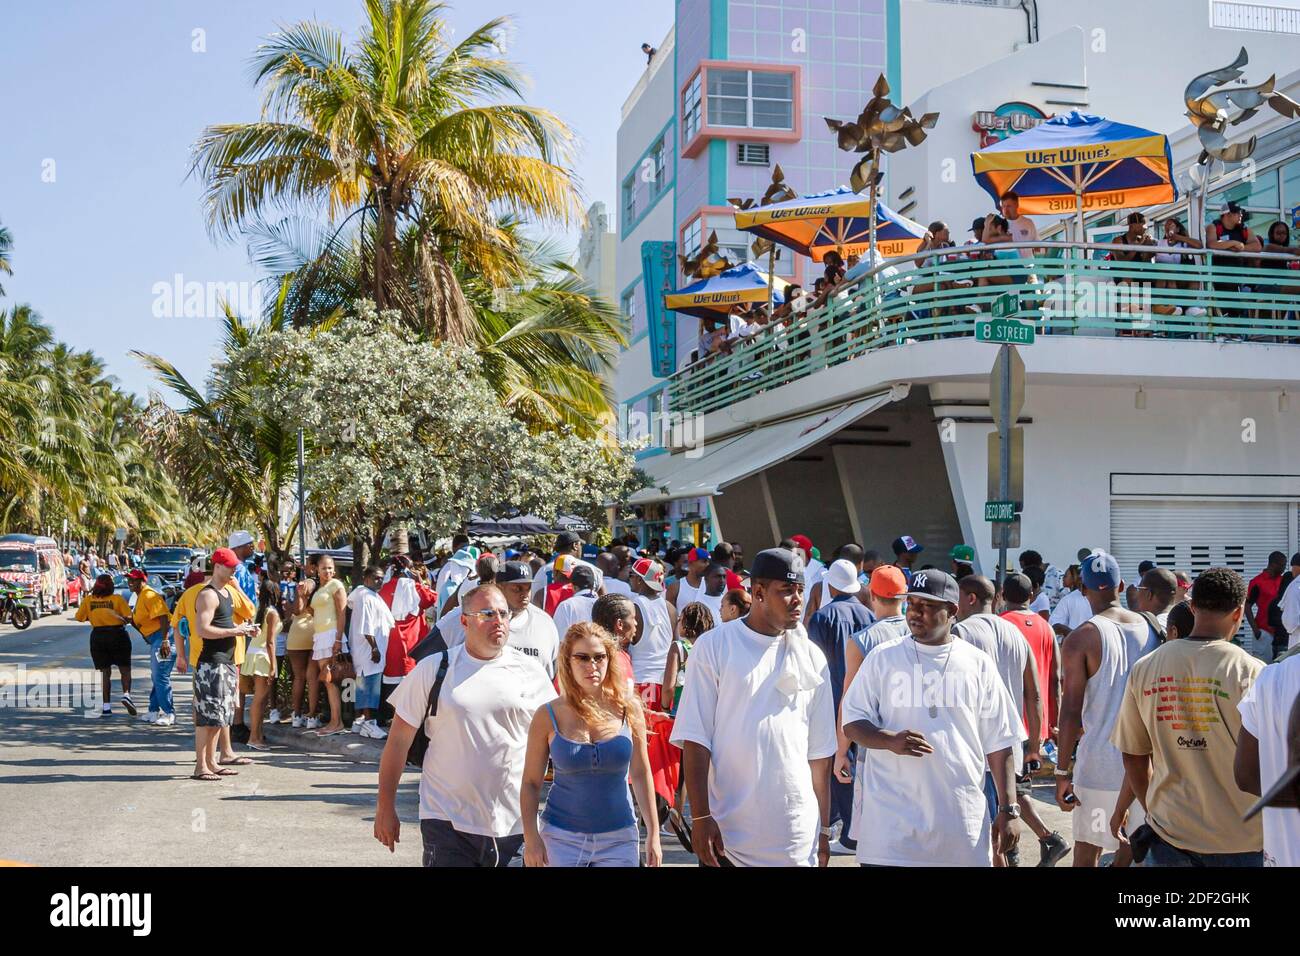 Miami Beach Florida, South Beach, Ocean Drive, Hip Hop Memorial Day Wochenende schwarzafrikanische Afrikaner Menge, Mann Männer Frau Frau Wet Willie's Bar Restaurant Stockfoto